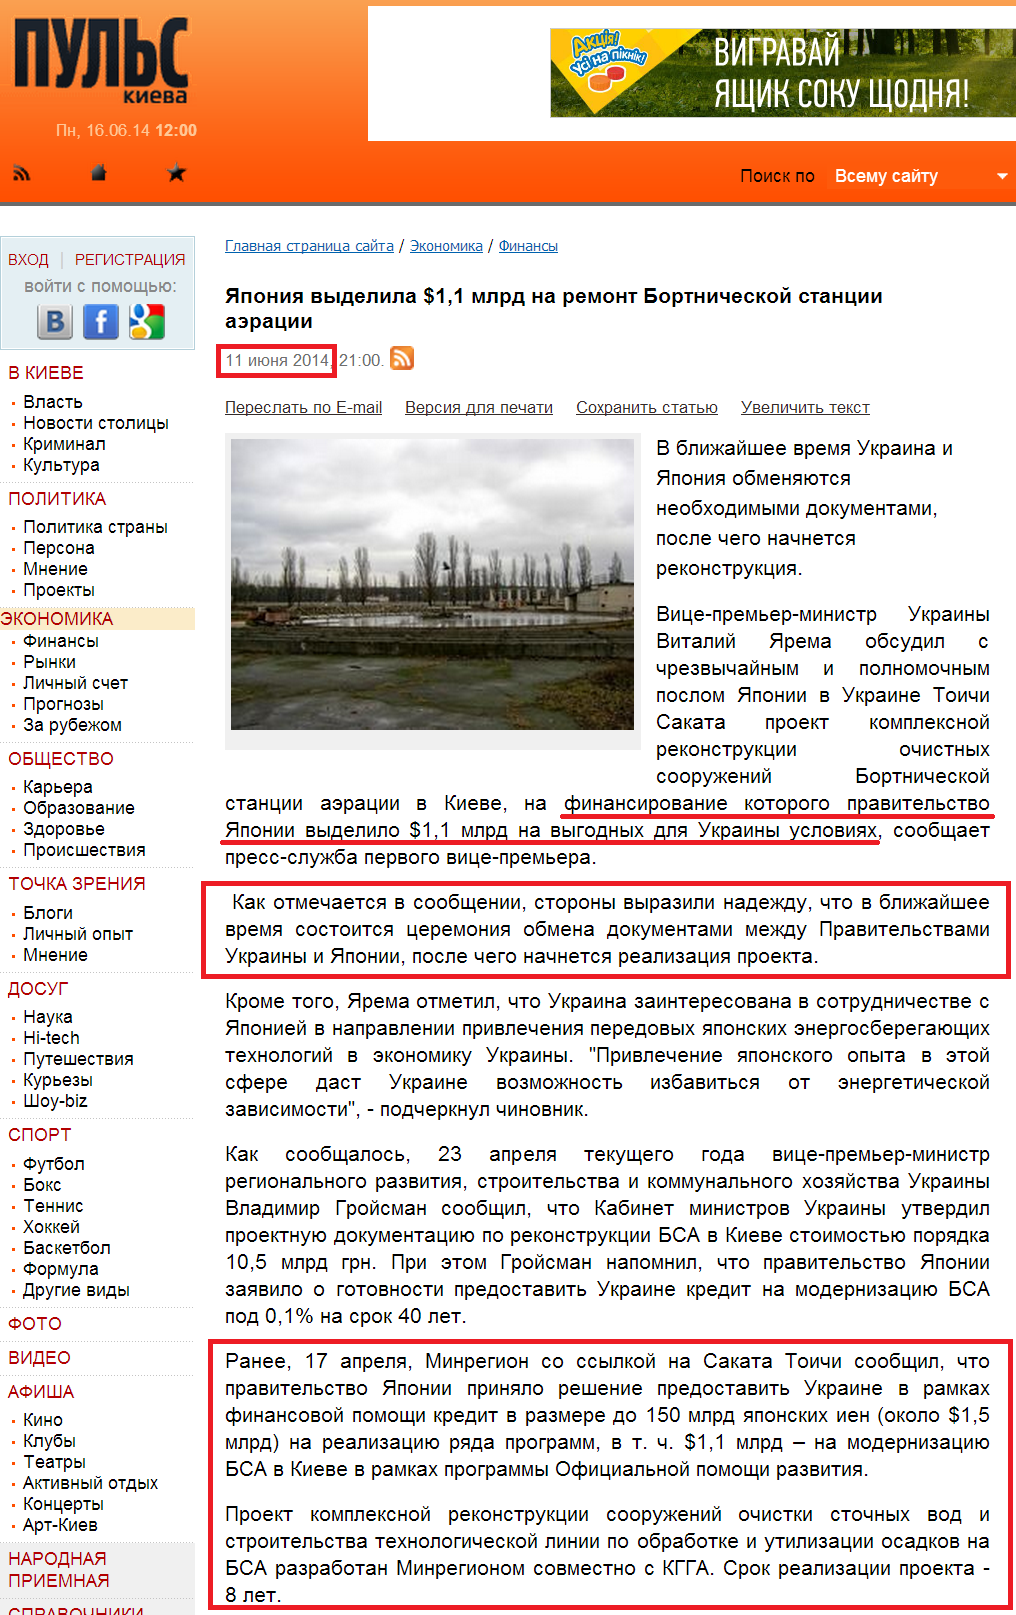 http://economics.puls.kiev.ua/finances/247938.html